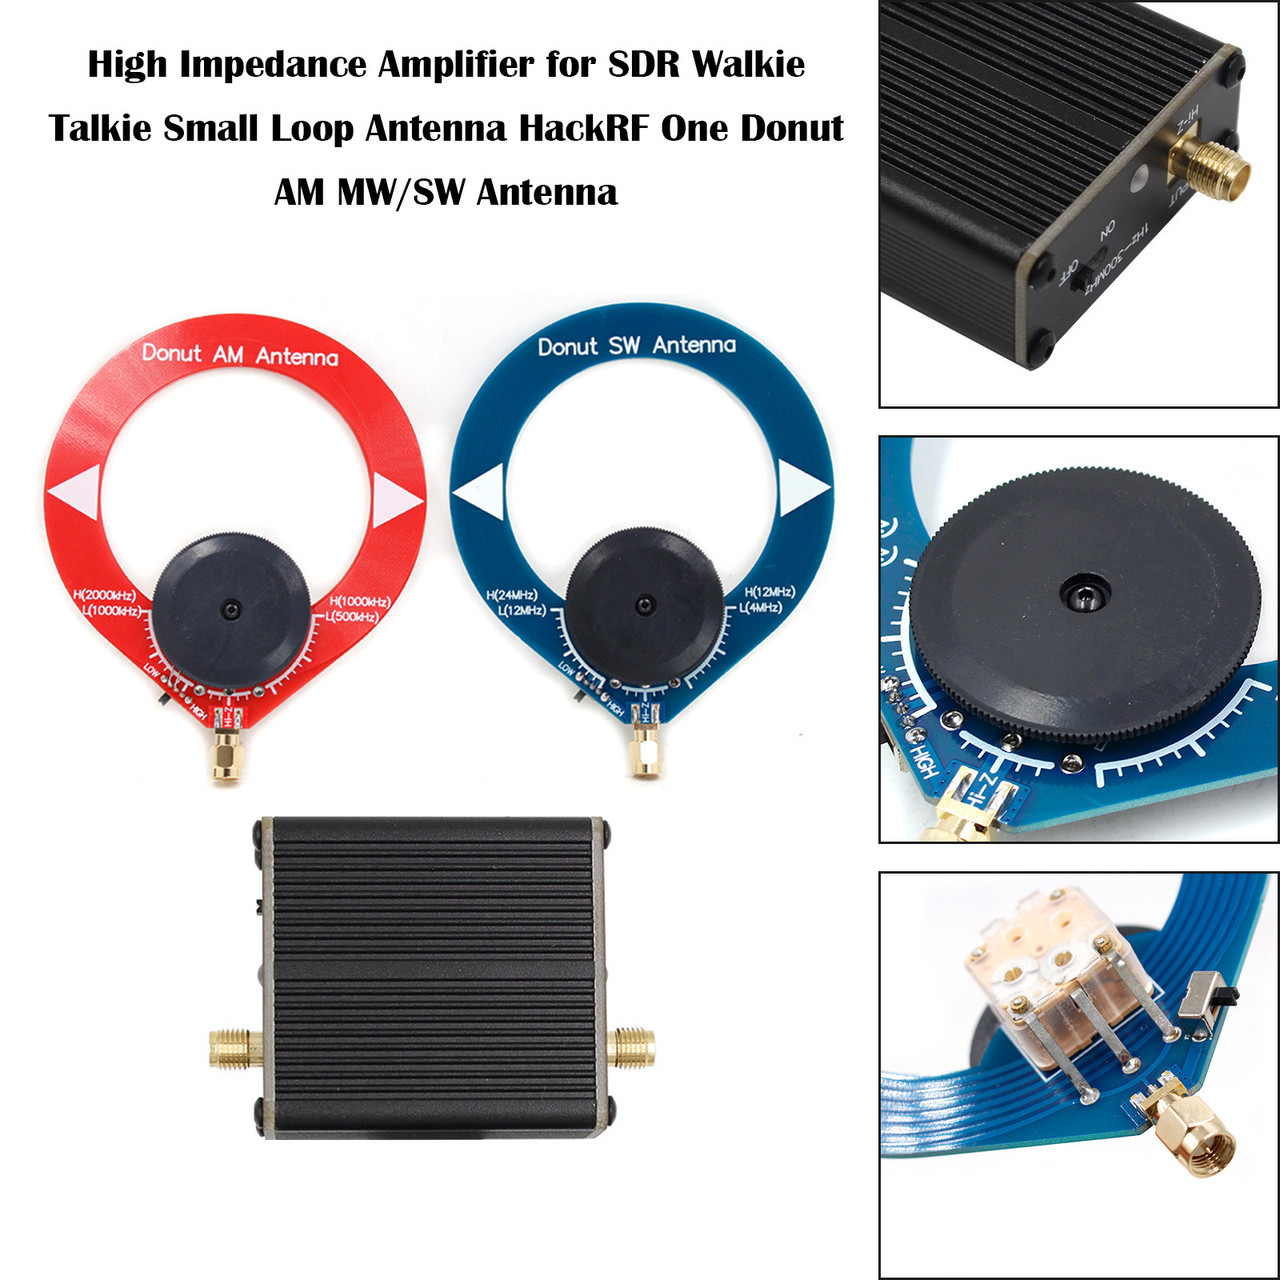 High Impedance Amplifier for SDR Walkie Talkie HackRF One Donut AM MW/SW Antenna